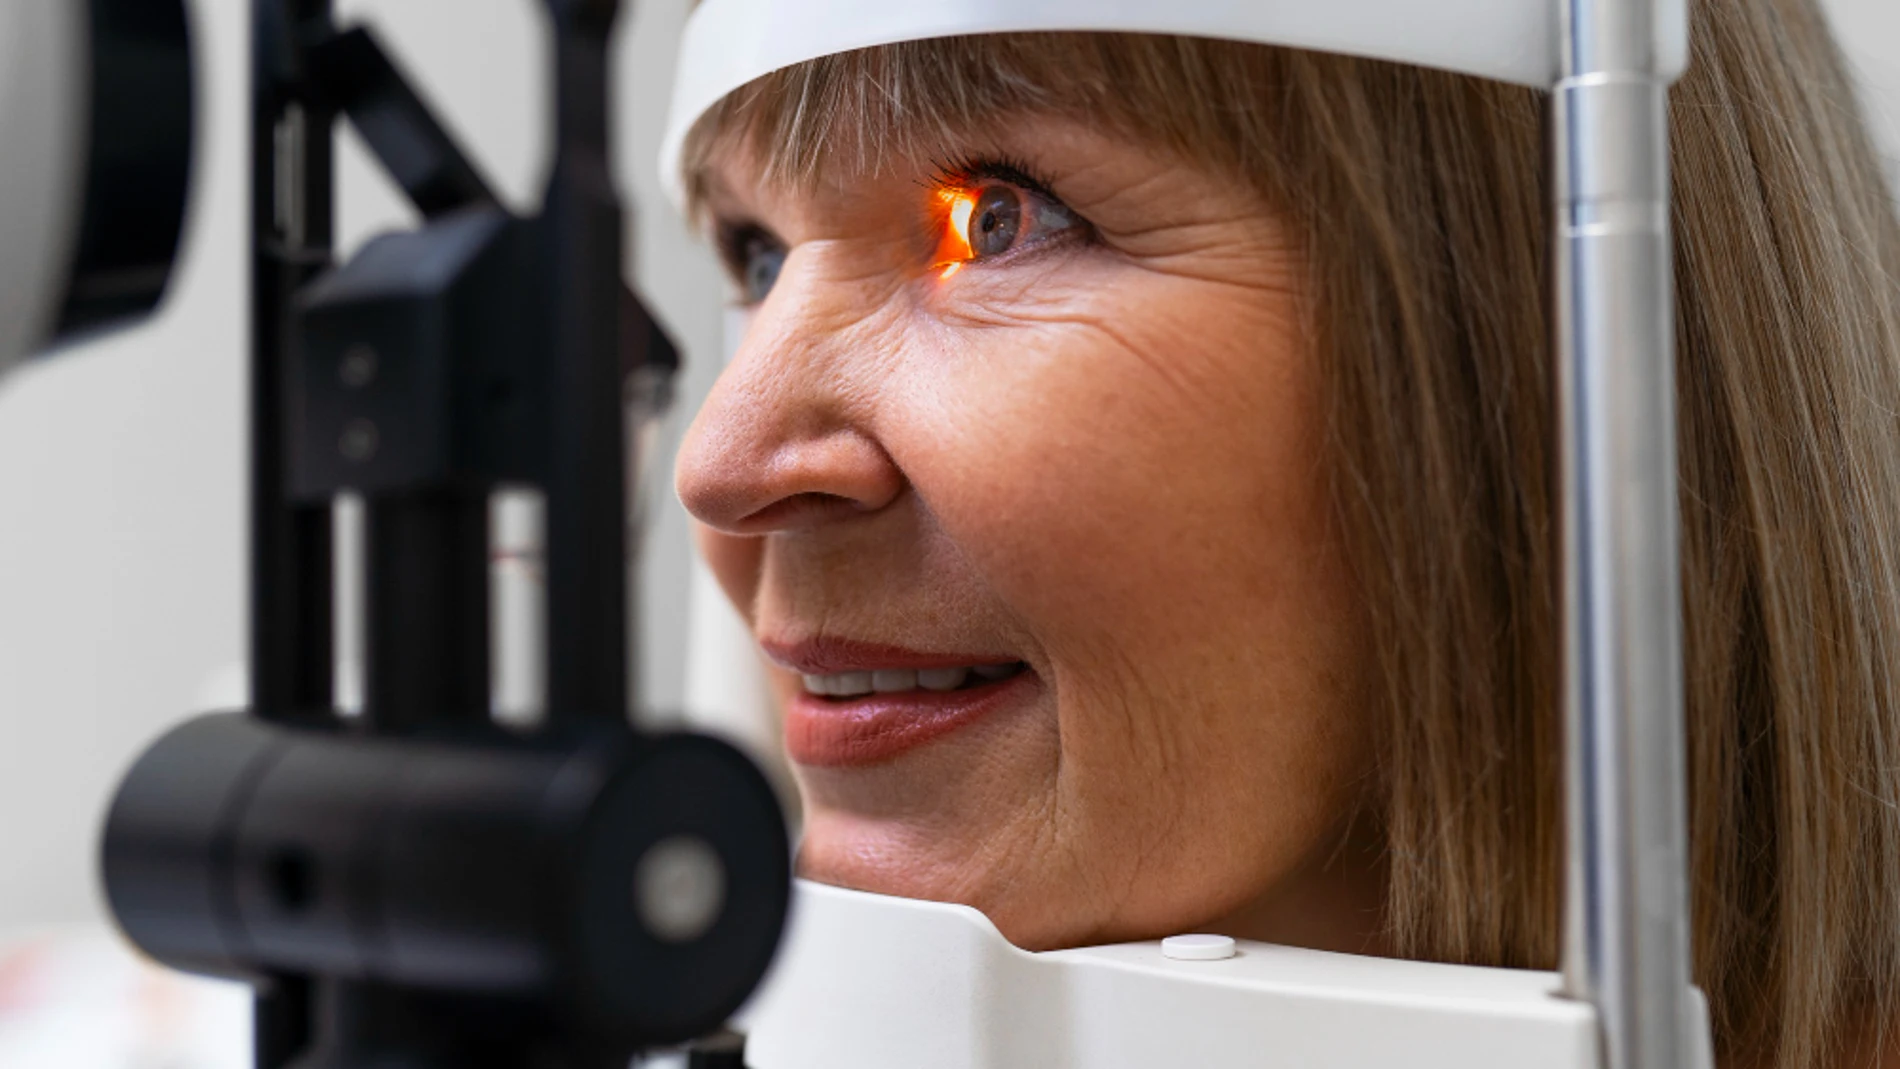 Oftalmología optica ojo